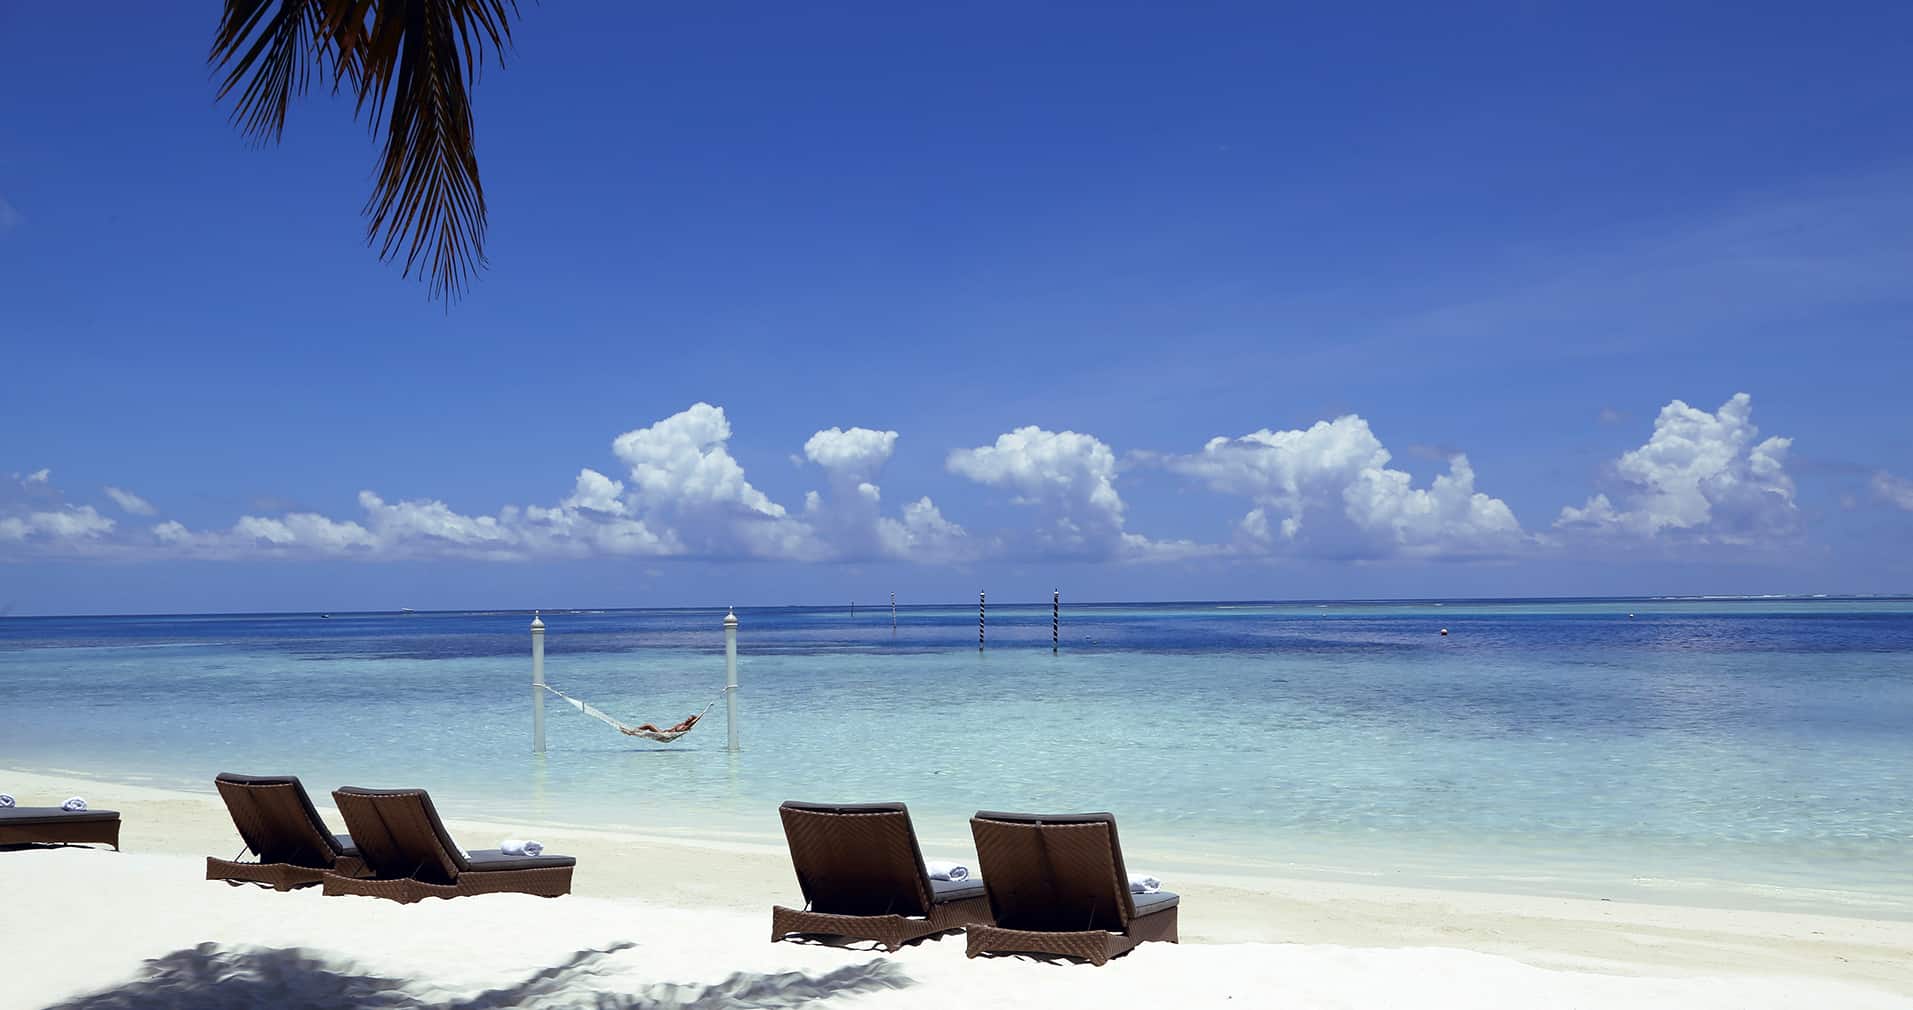 Nika Island Beaches, The Maldives Travel Guide, best Maldives beaches, best beaches of Asia, beach travel, best hotel in the Maldives, best restaurants in the Maldives, best nightlife in the Maldives, Maldives beaches, Maldives luxury resorts